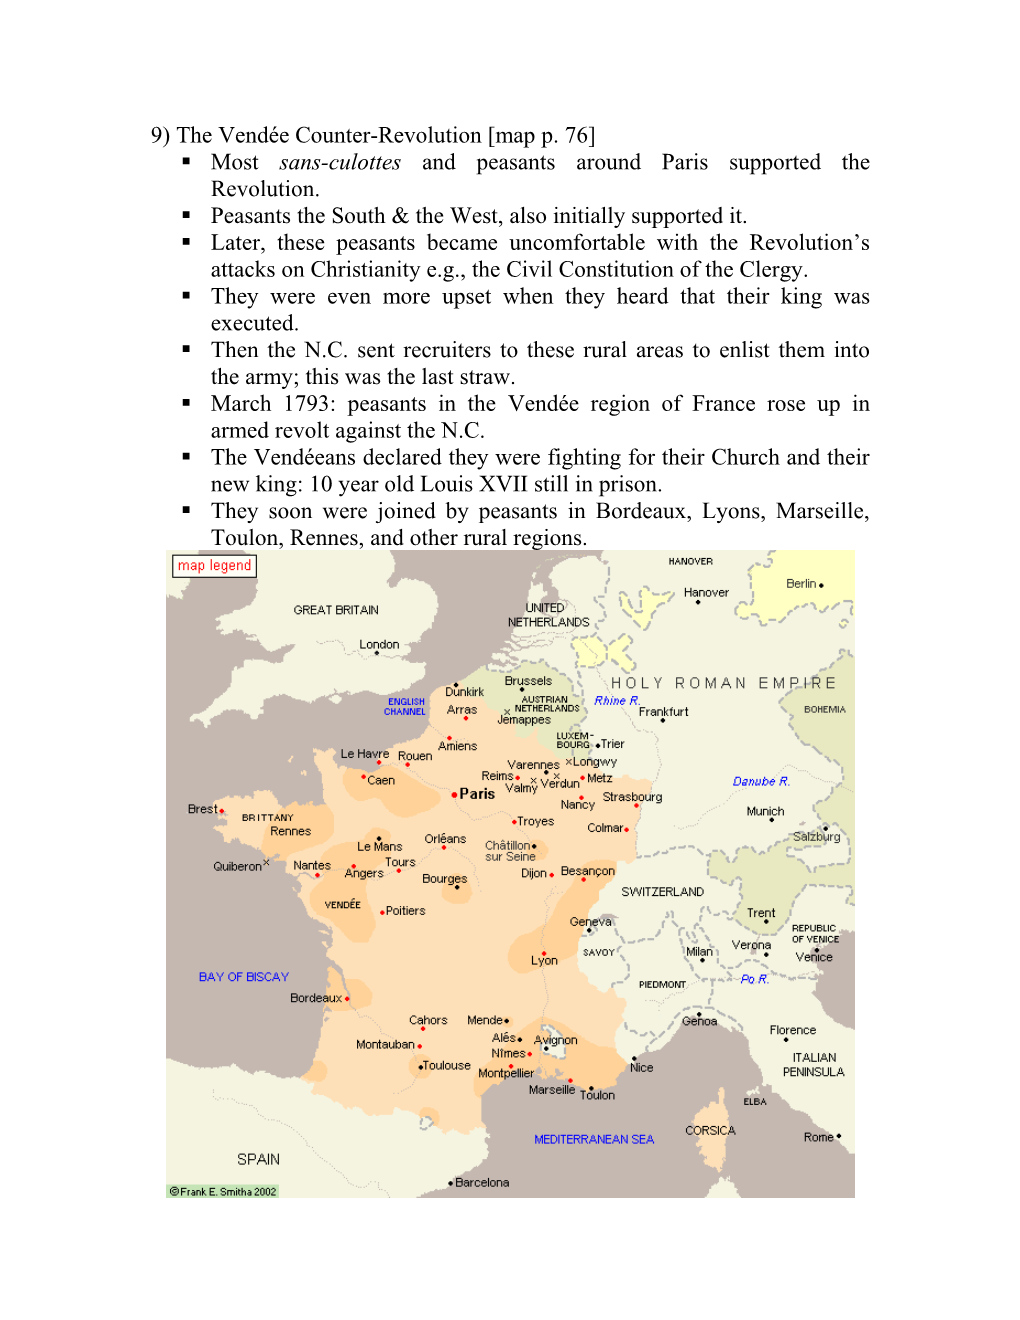 8) the Vendée Counter-Revolution Map P